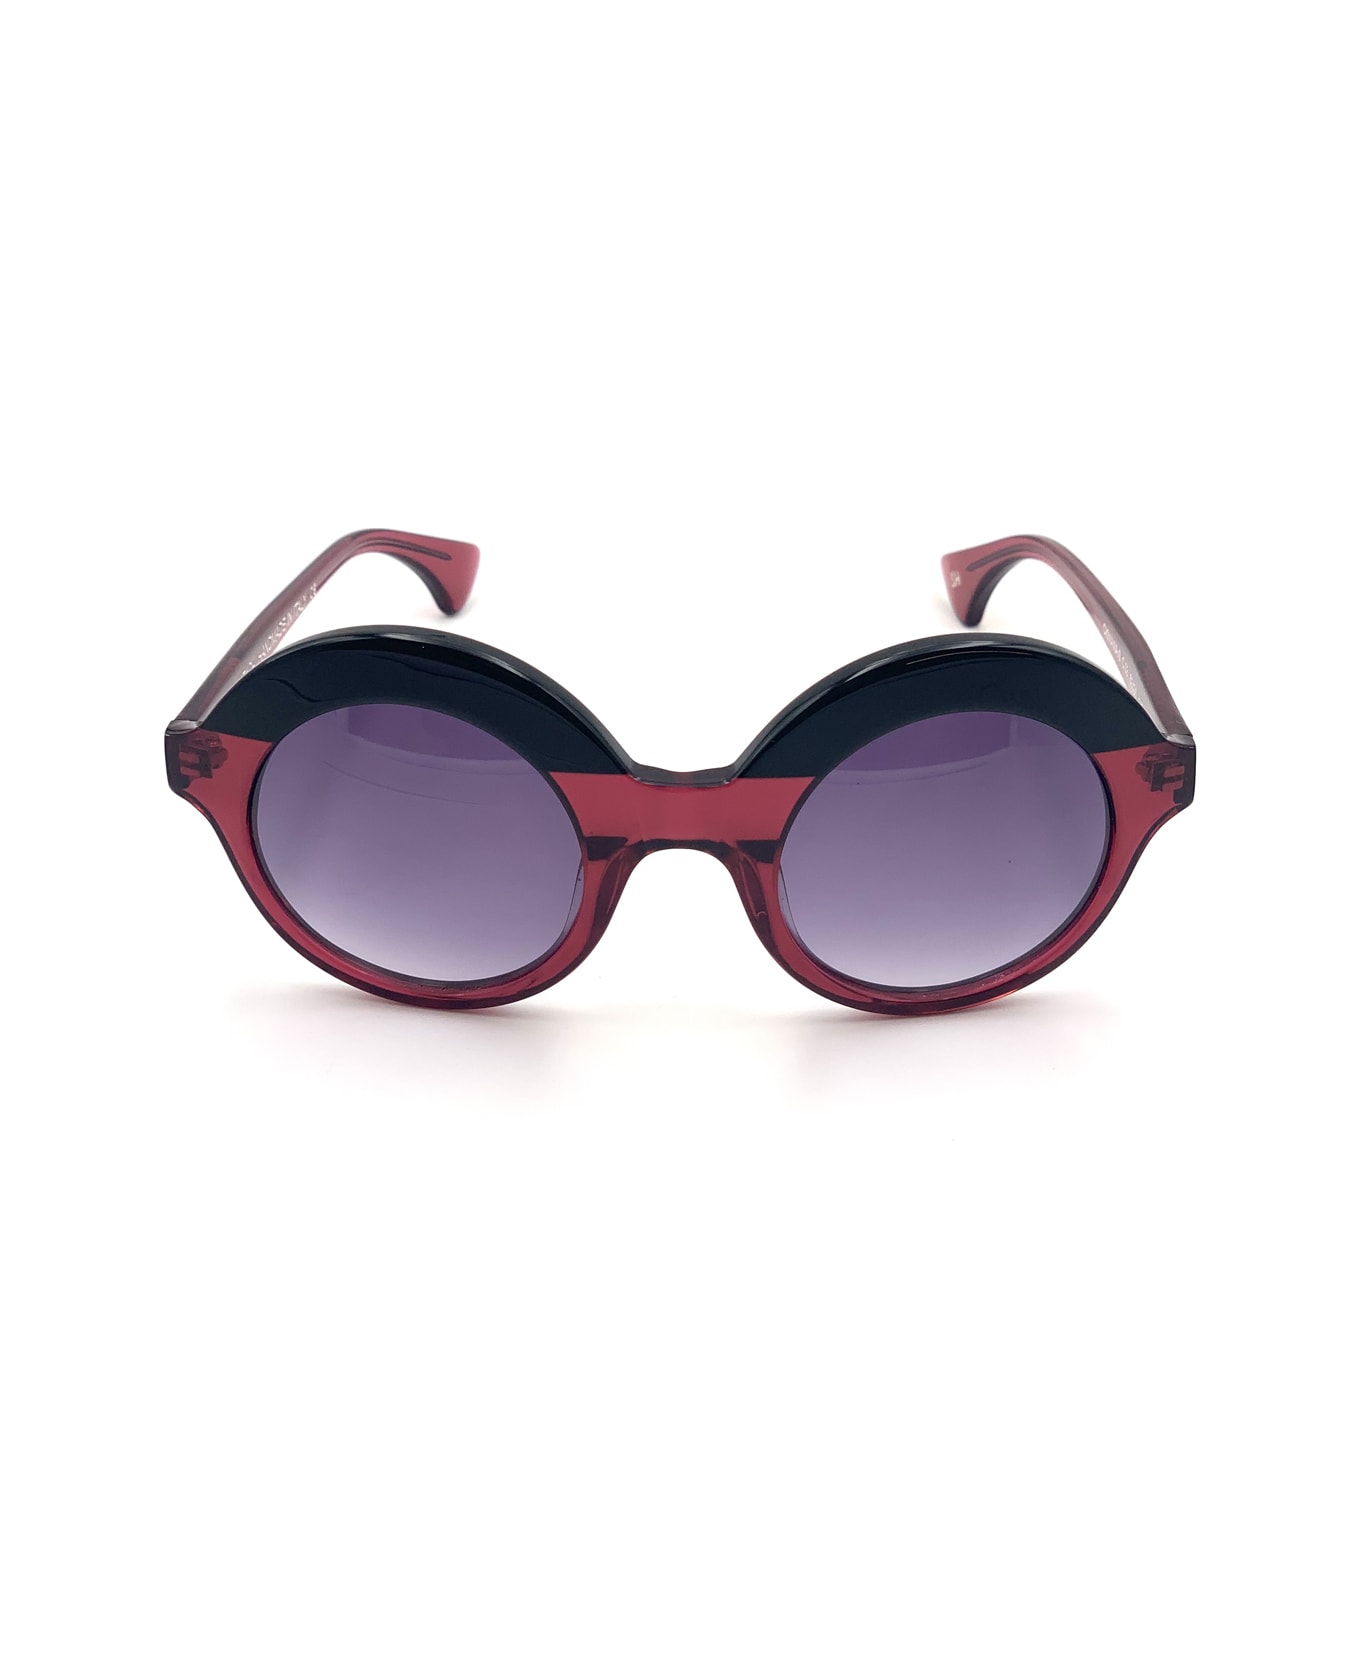 Silvian Heach Okinawa/s 03 Sunglasses - Rosso サングラス